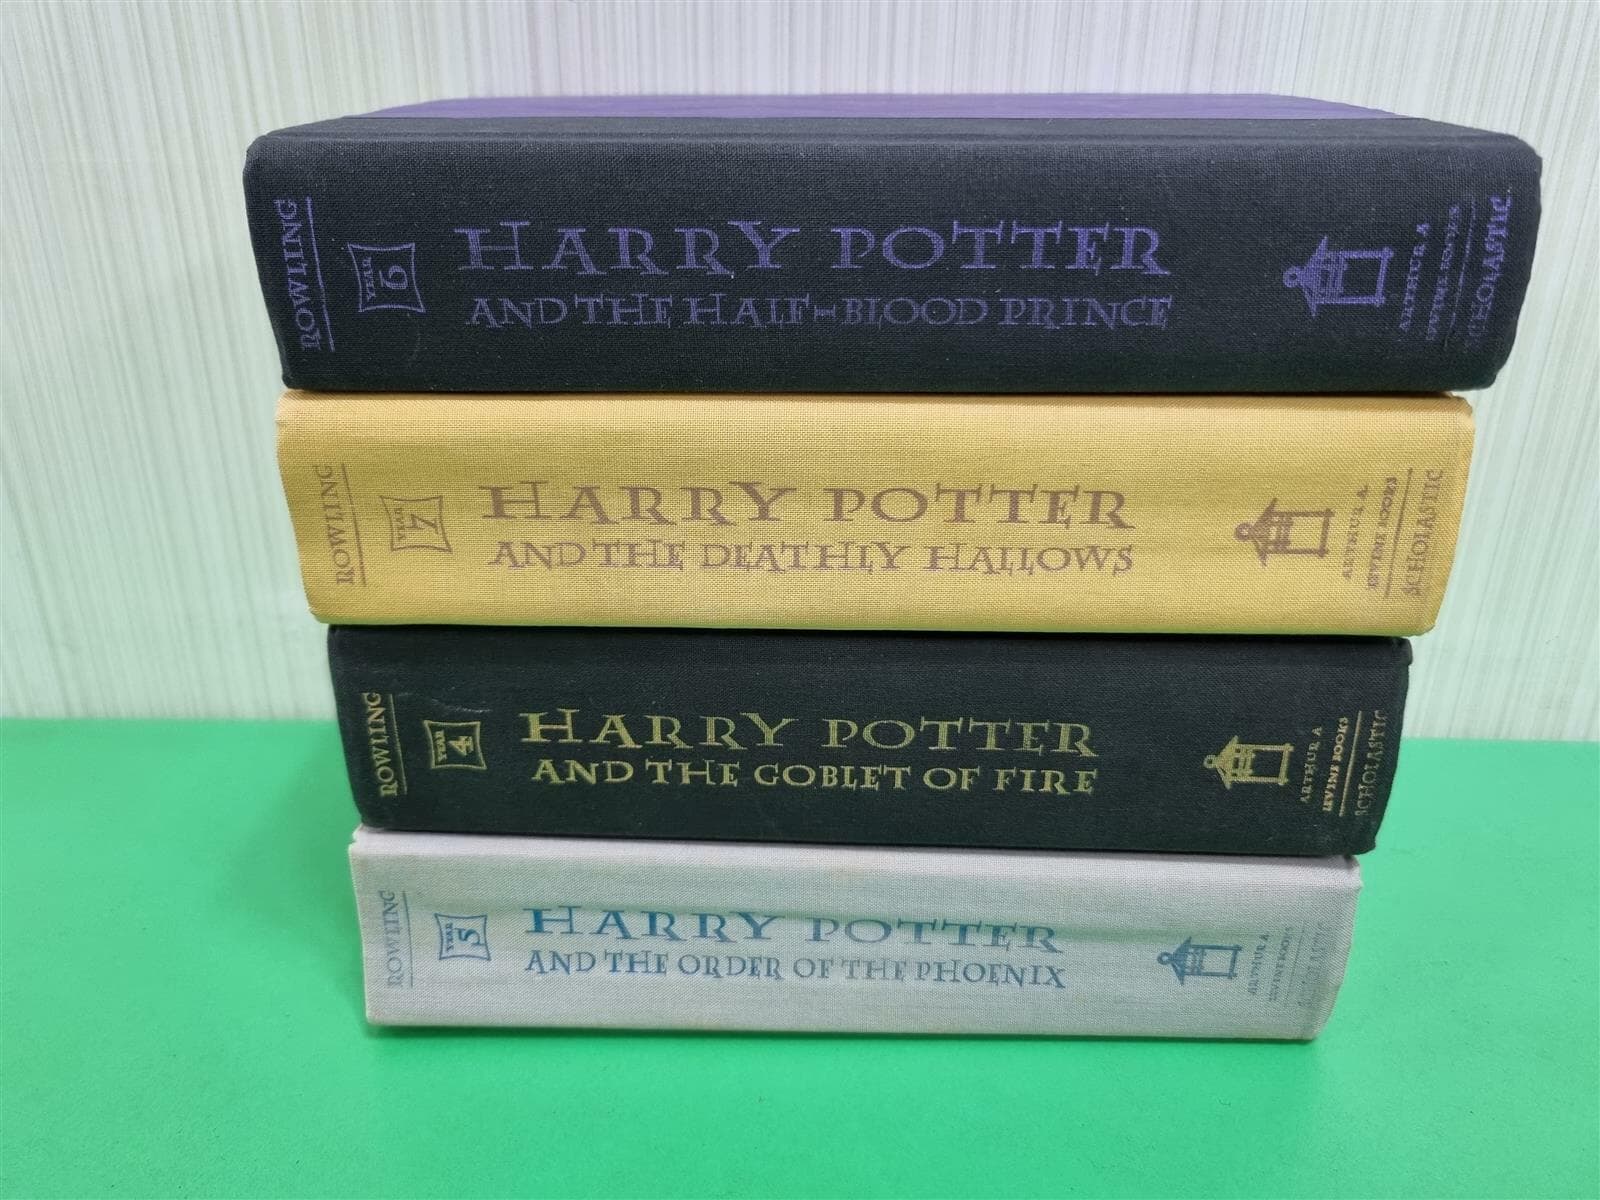 J. K. Rowling‘s Harry Potter 4,5,6,7 총4권 (Hardcover) - 미국판 두꺼운 양장본 -- 상세사진 올림